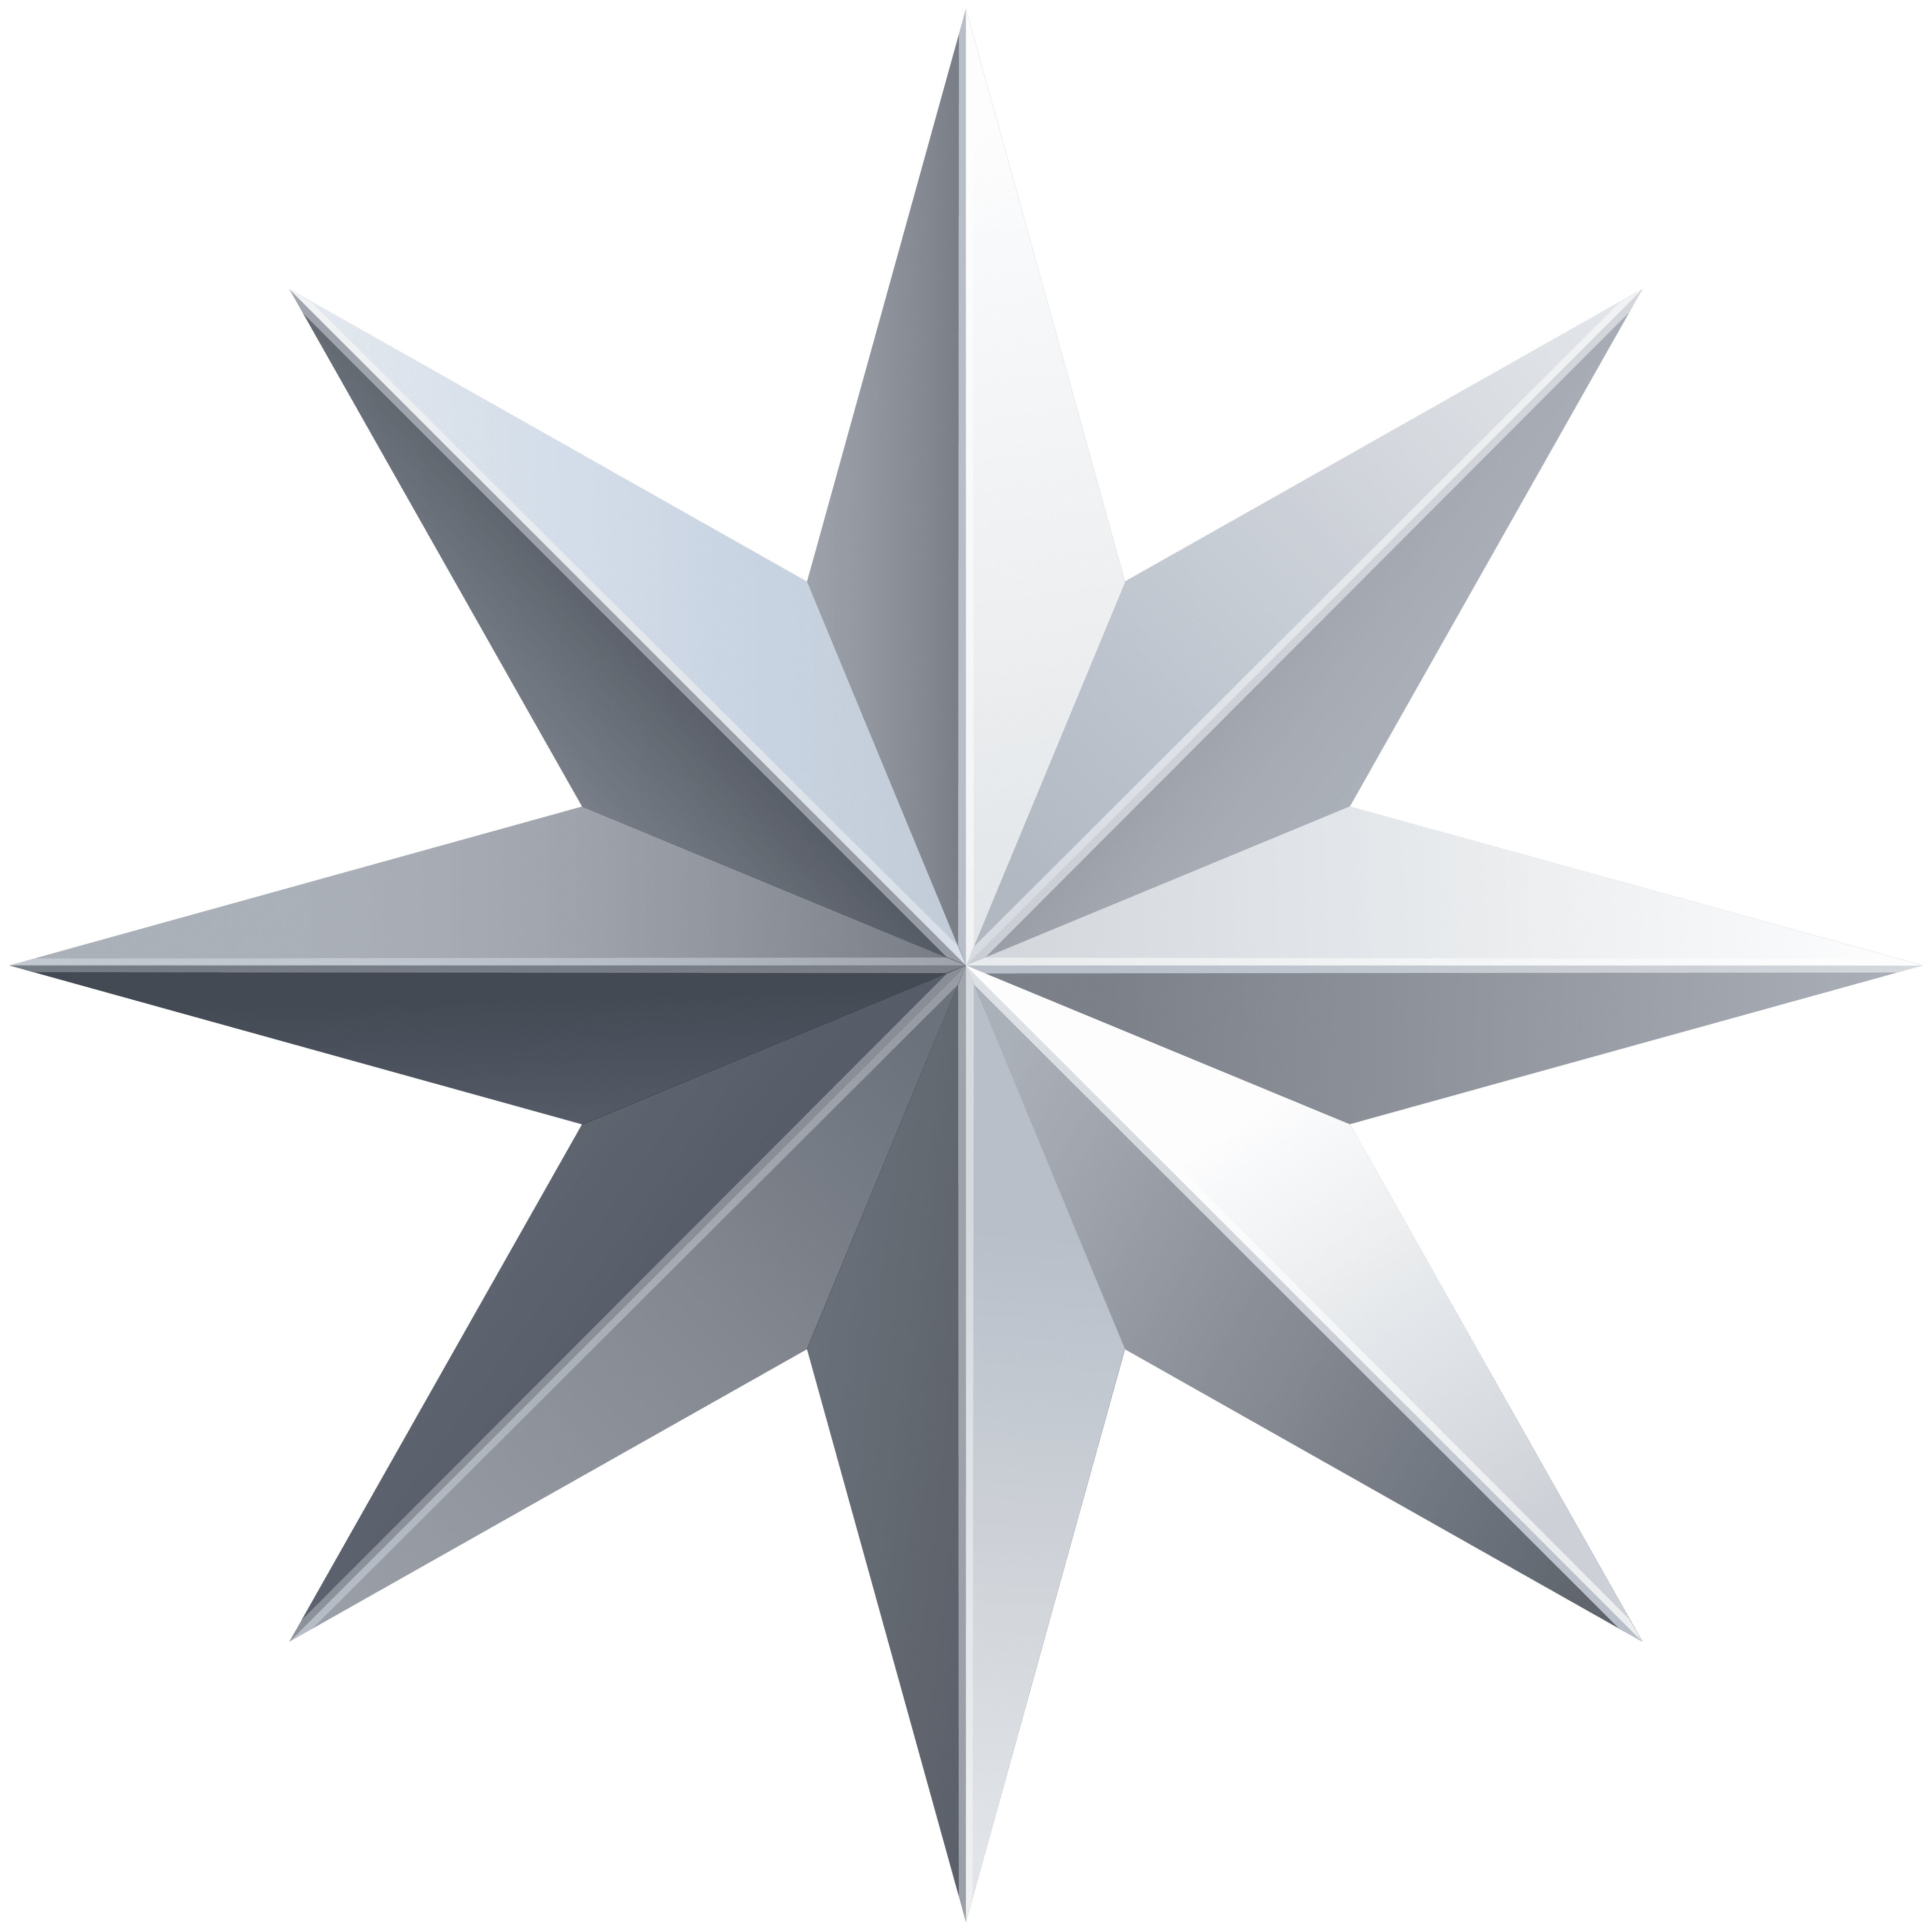 Silver Star Transparent PNG Image